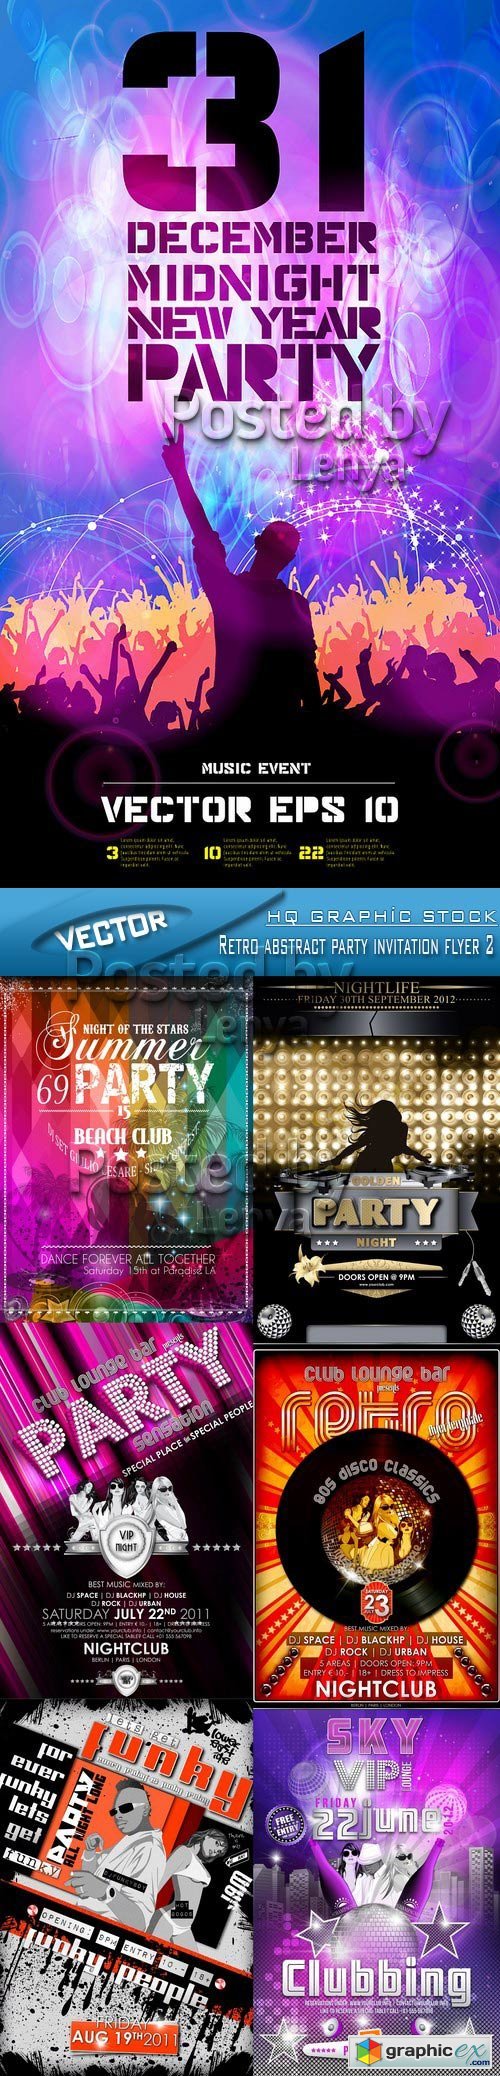 Stock Vector - Retro abstract party invitation flyer 2